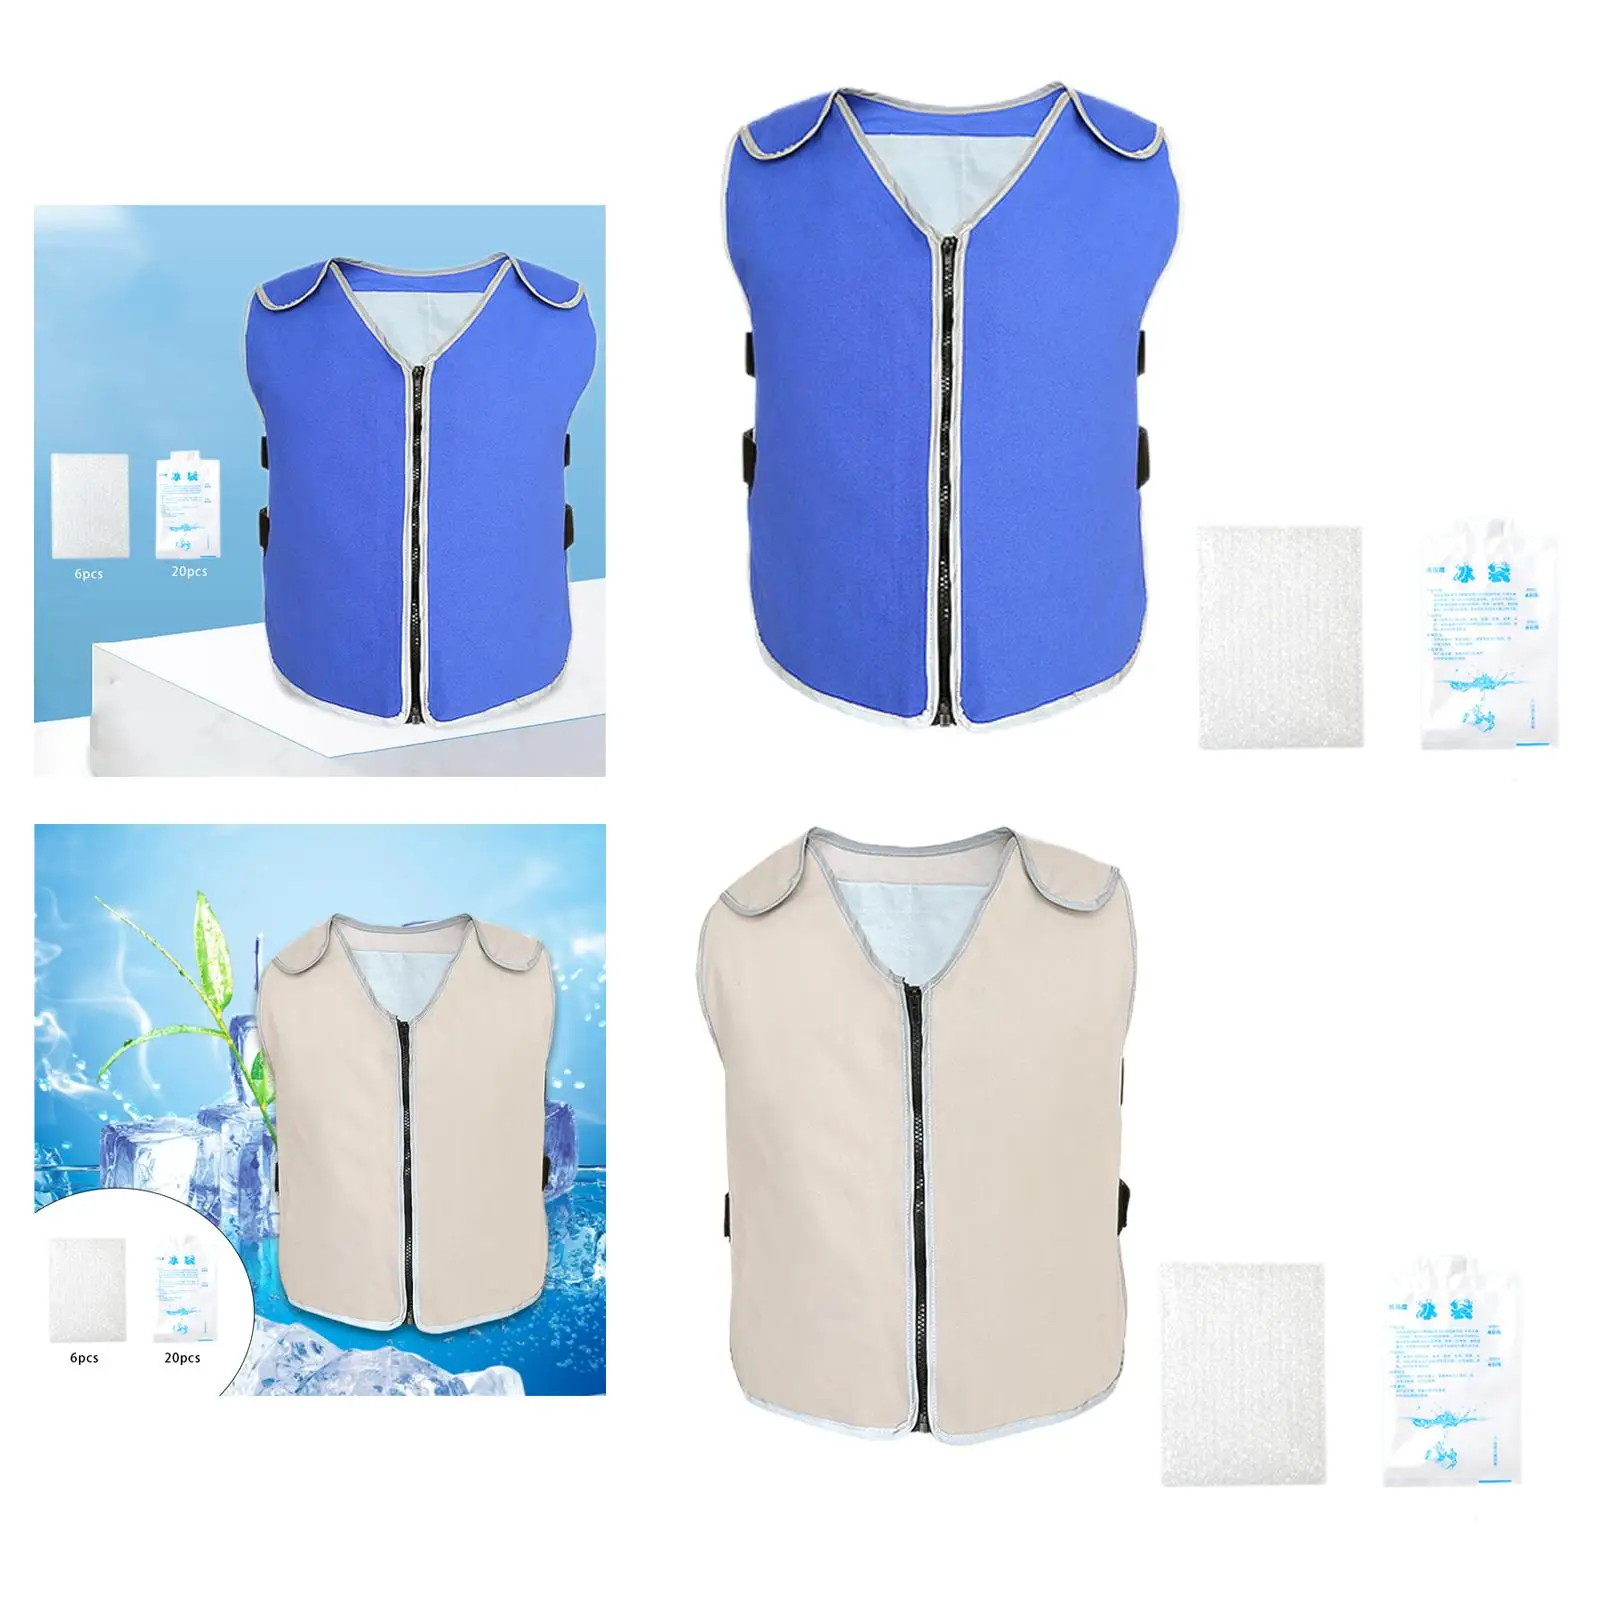 Reflective Cooling Vest Adjustable Zipper for Men Women Summer Hot Weather